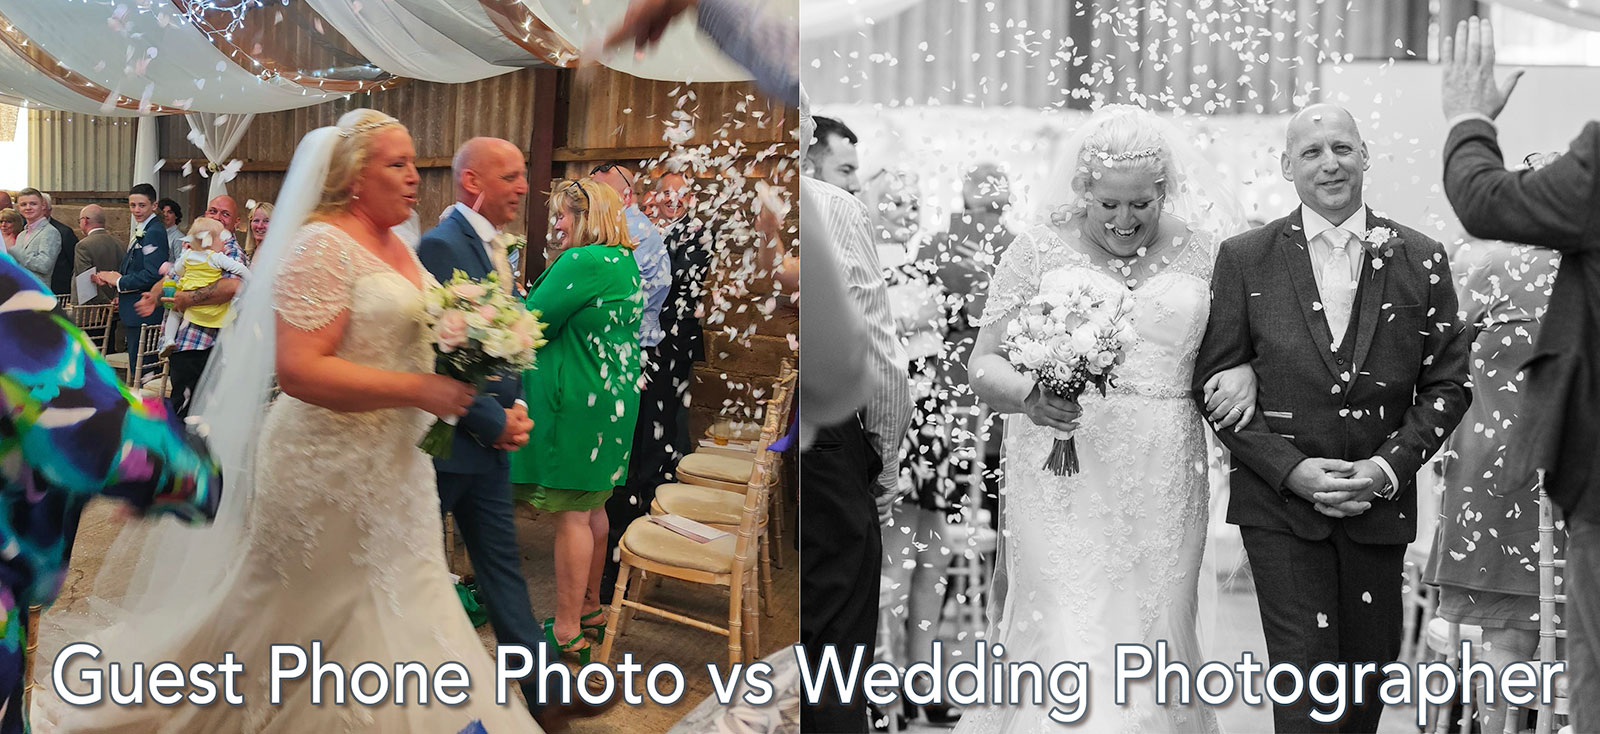 phone photo vs wedding photographer photo.